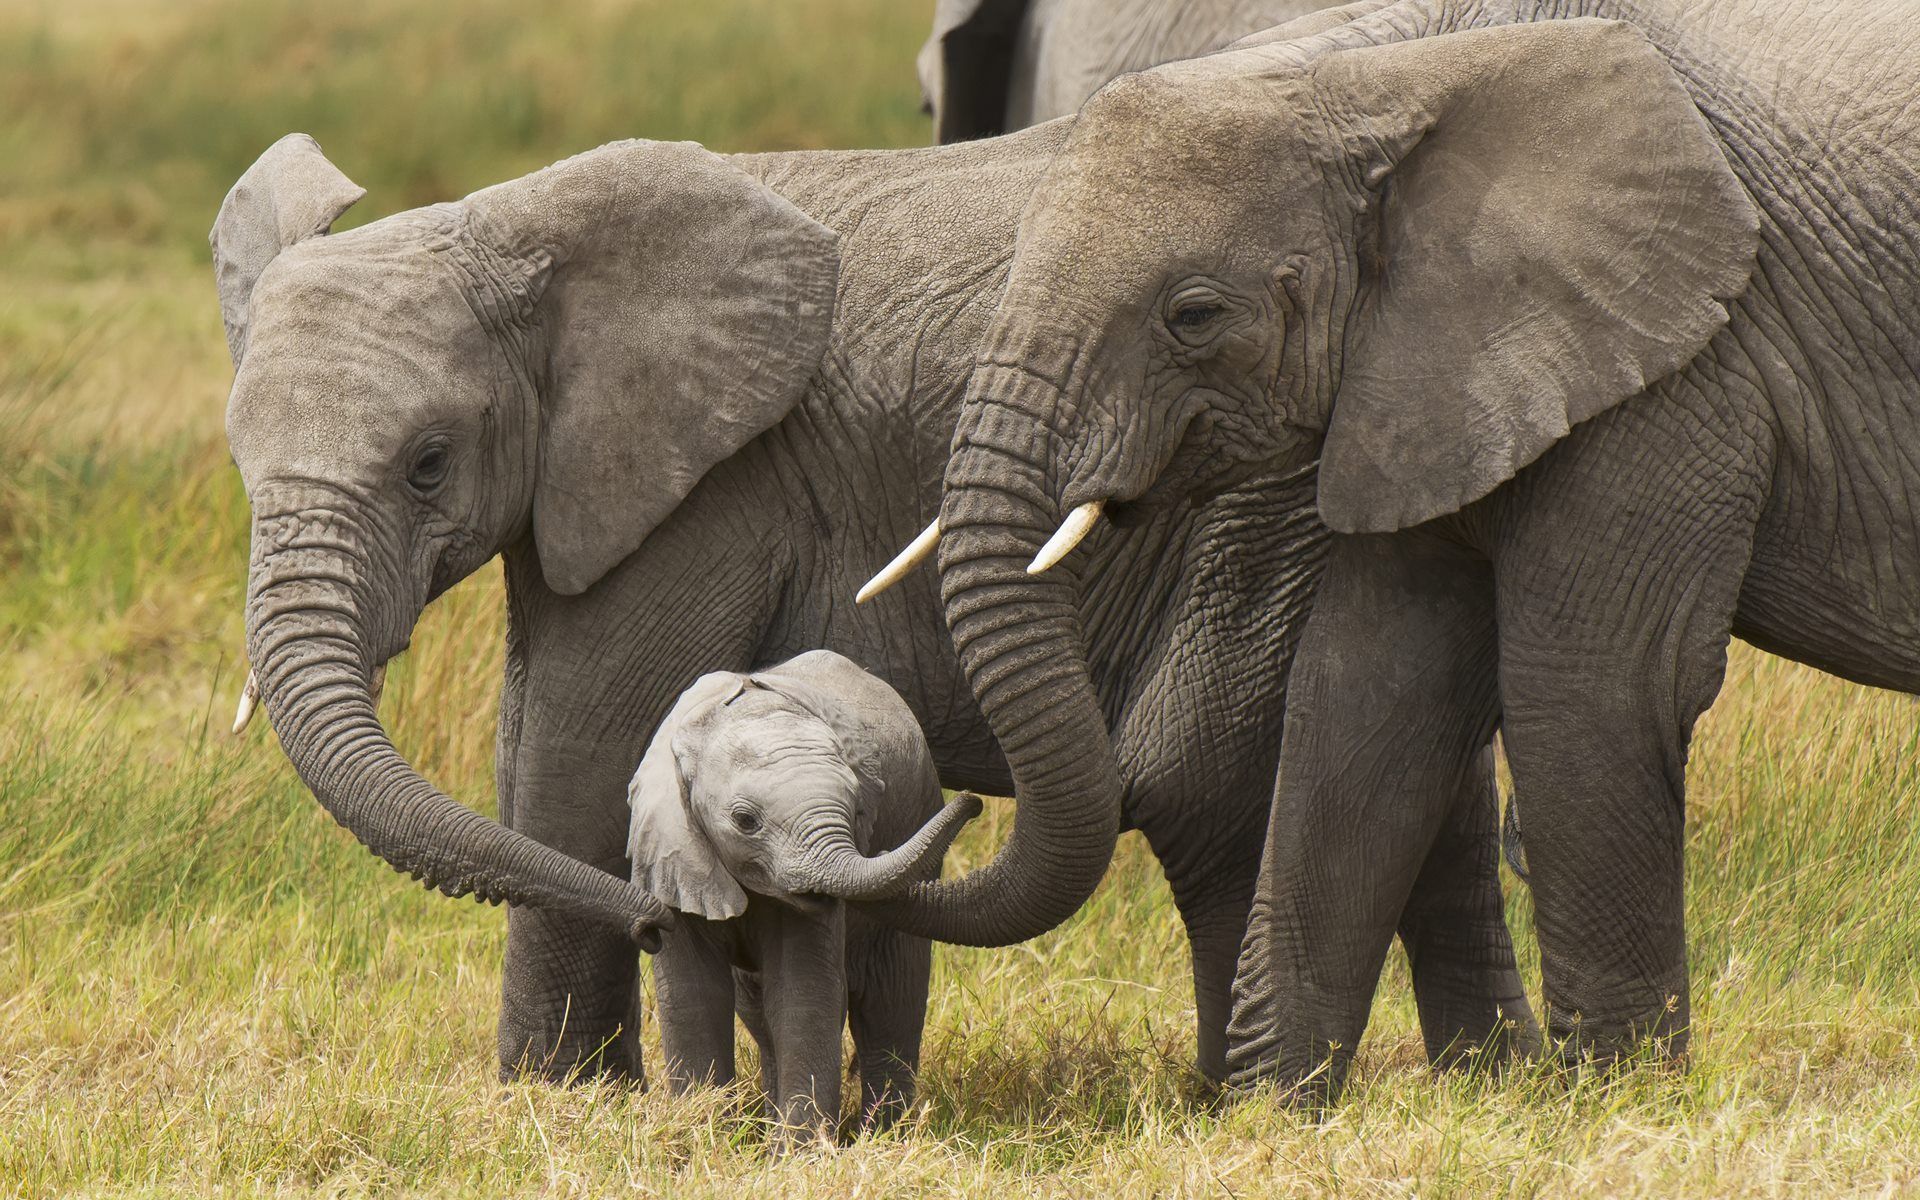 Cute Baby Elephant Wallpapers HD | Disney | Fondo de pantalla de elefante